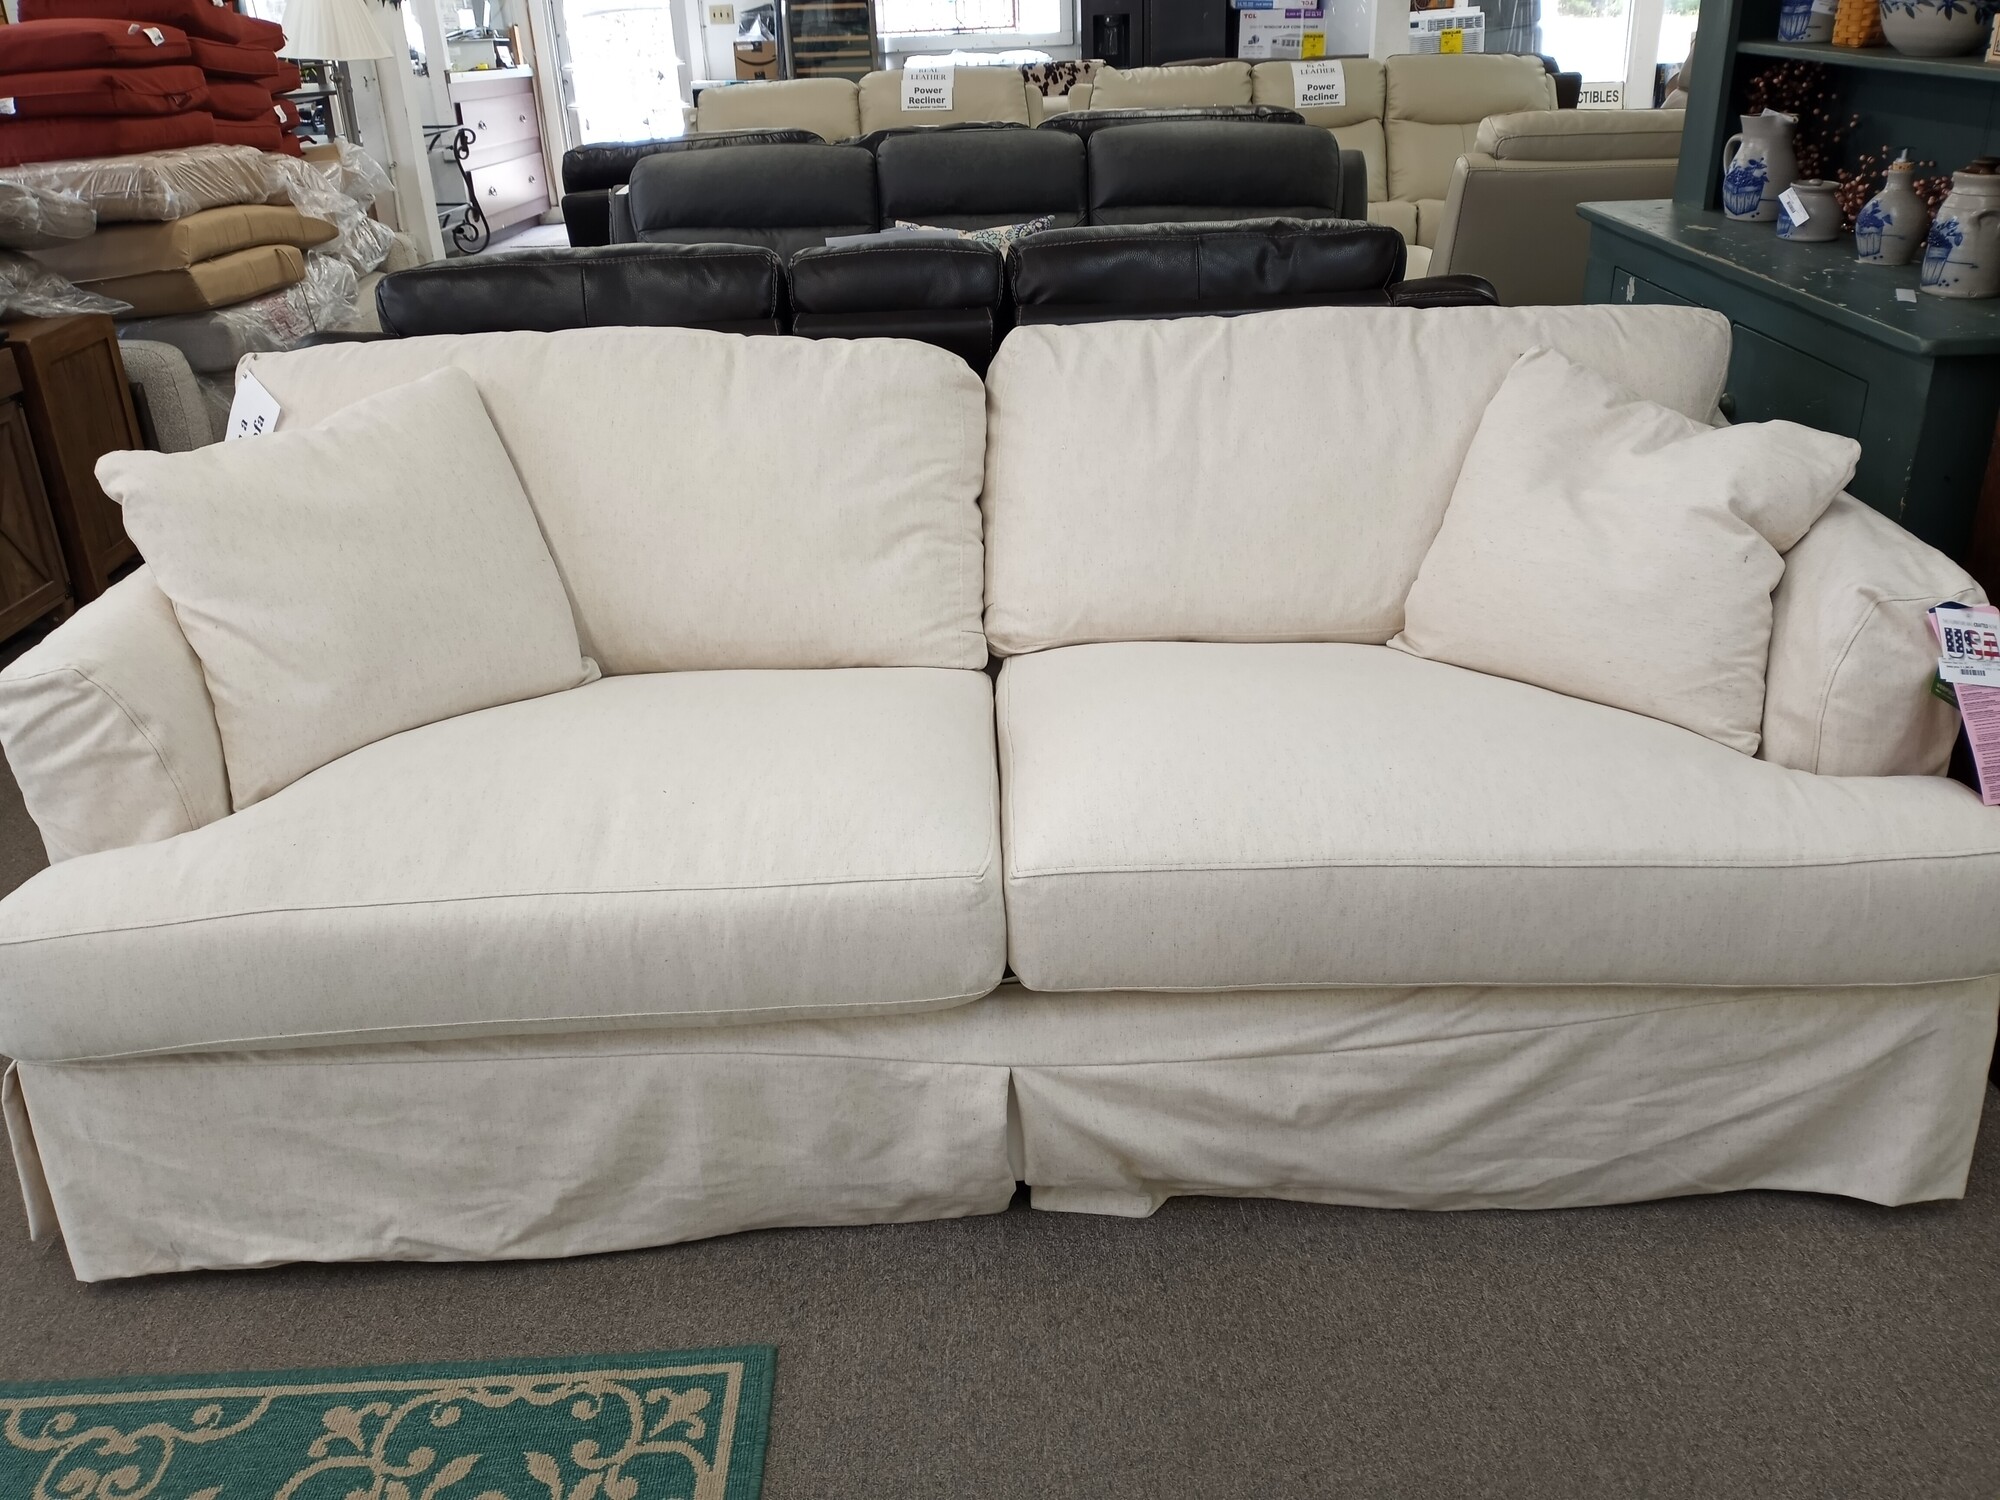 Klaussner Sleep Sofa 2K Plus retail!
Linen style slip cover Down cushions